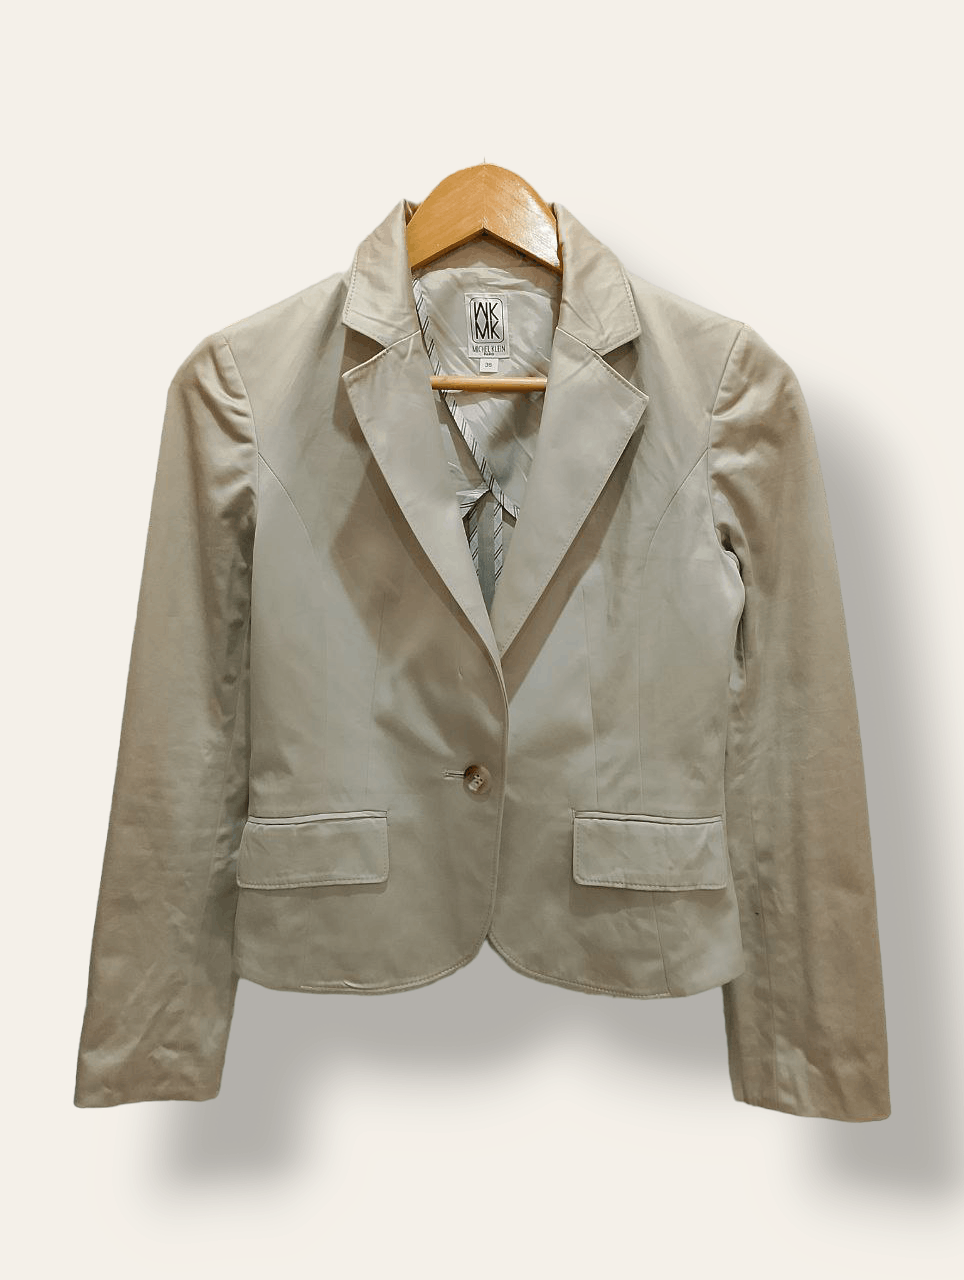 Archival Clothing - MK Michel Klein Paris Single Breast Casual Suit Coat Blazer - 1